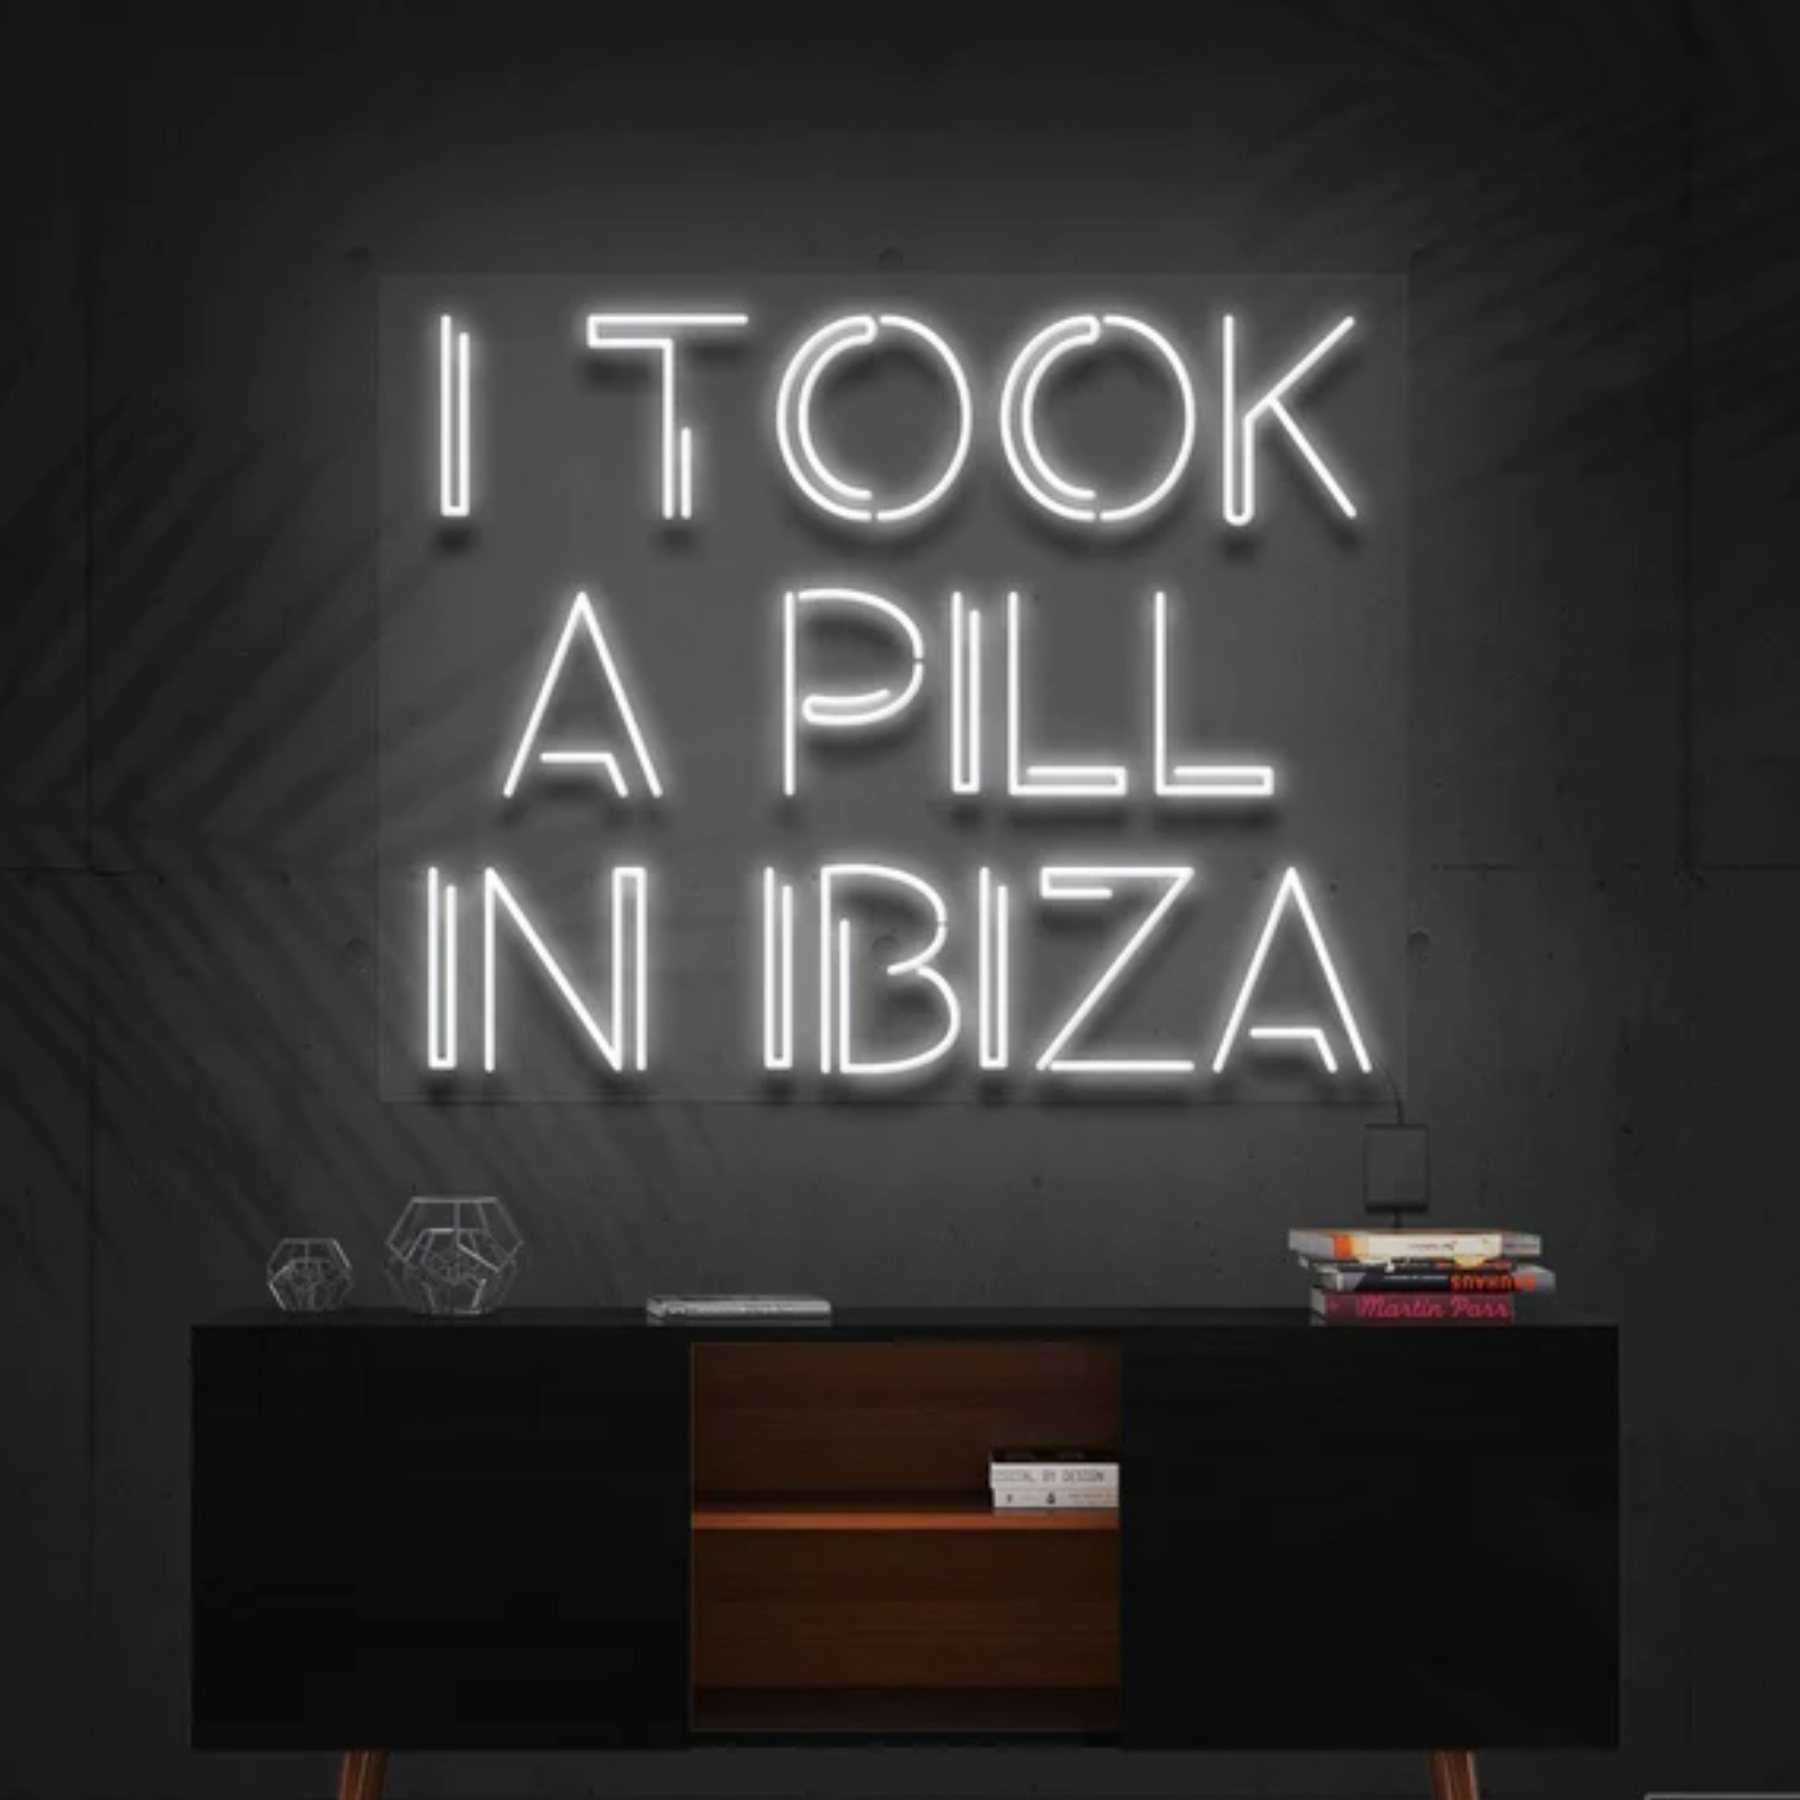 I Took a Pill in Ibiza